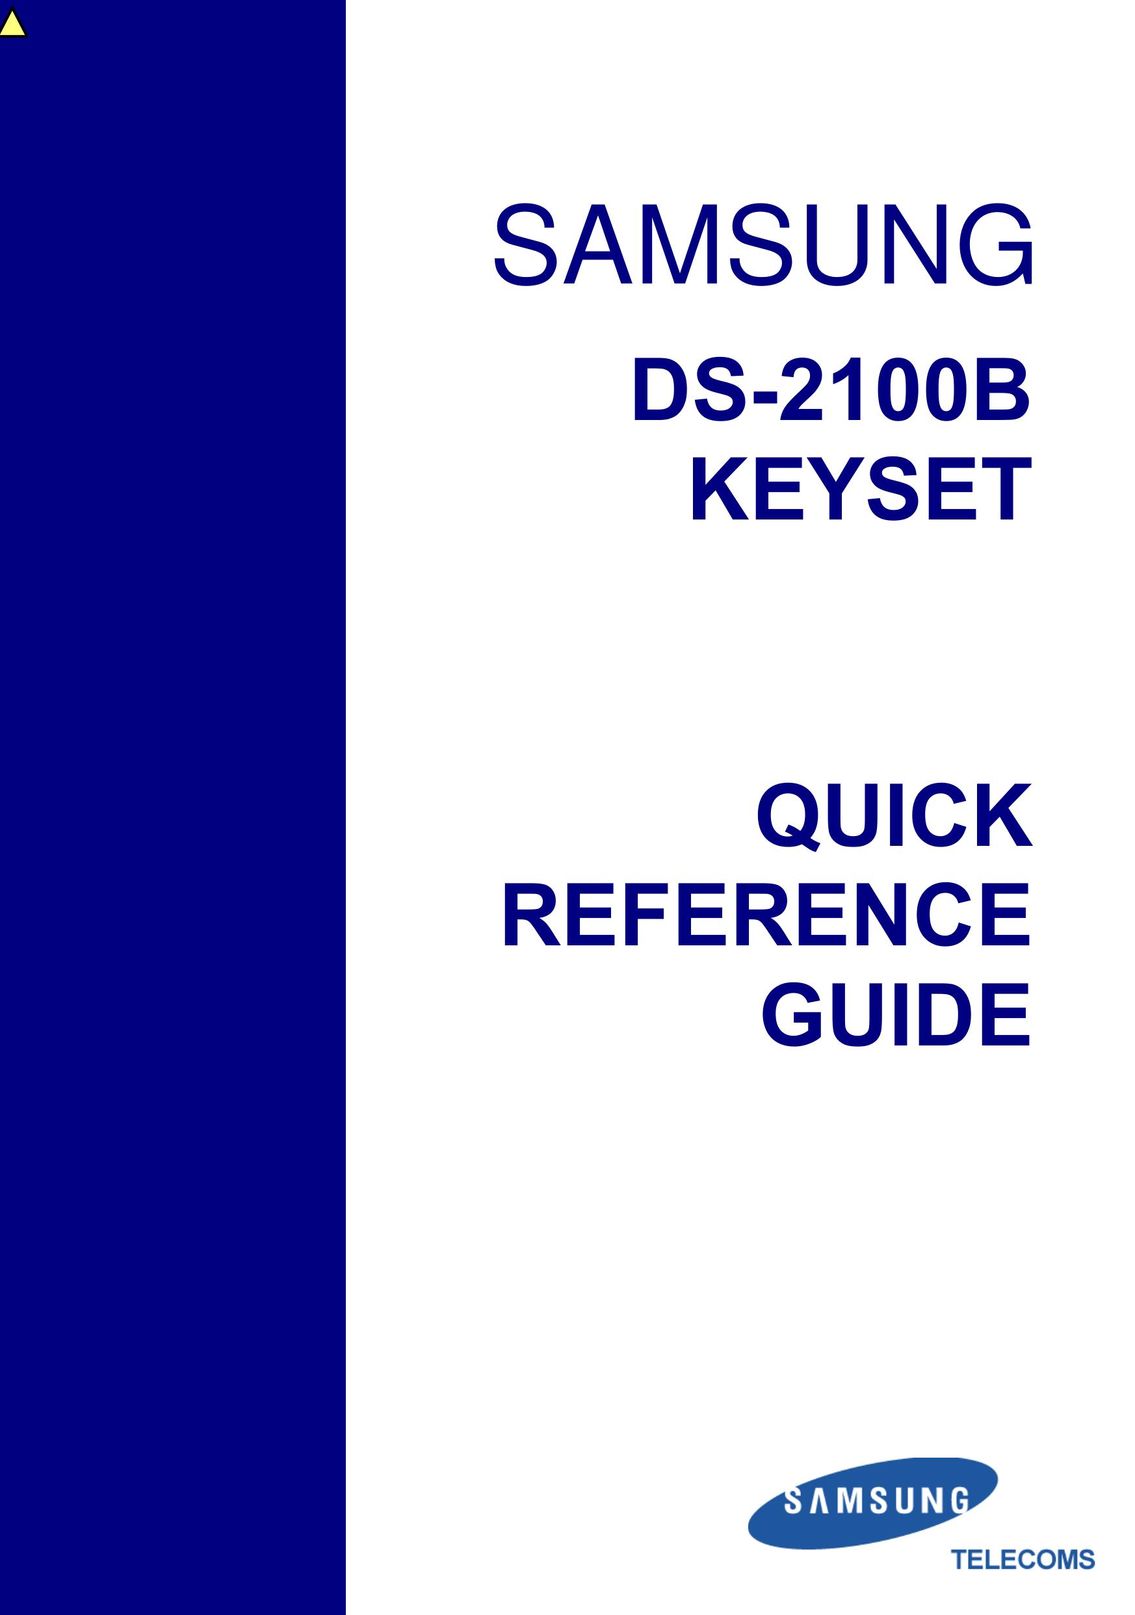 Samsung DS-2100B Video Game Keyboard User Manual